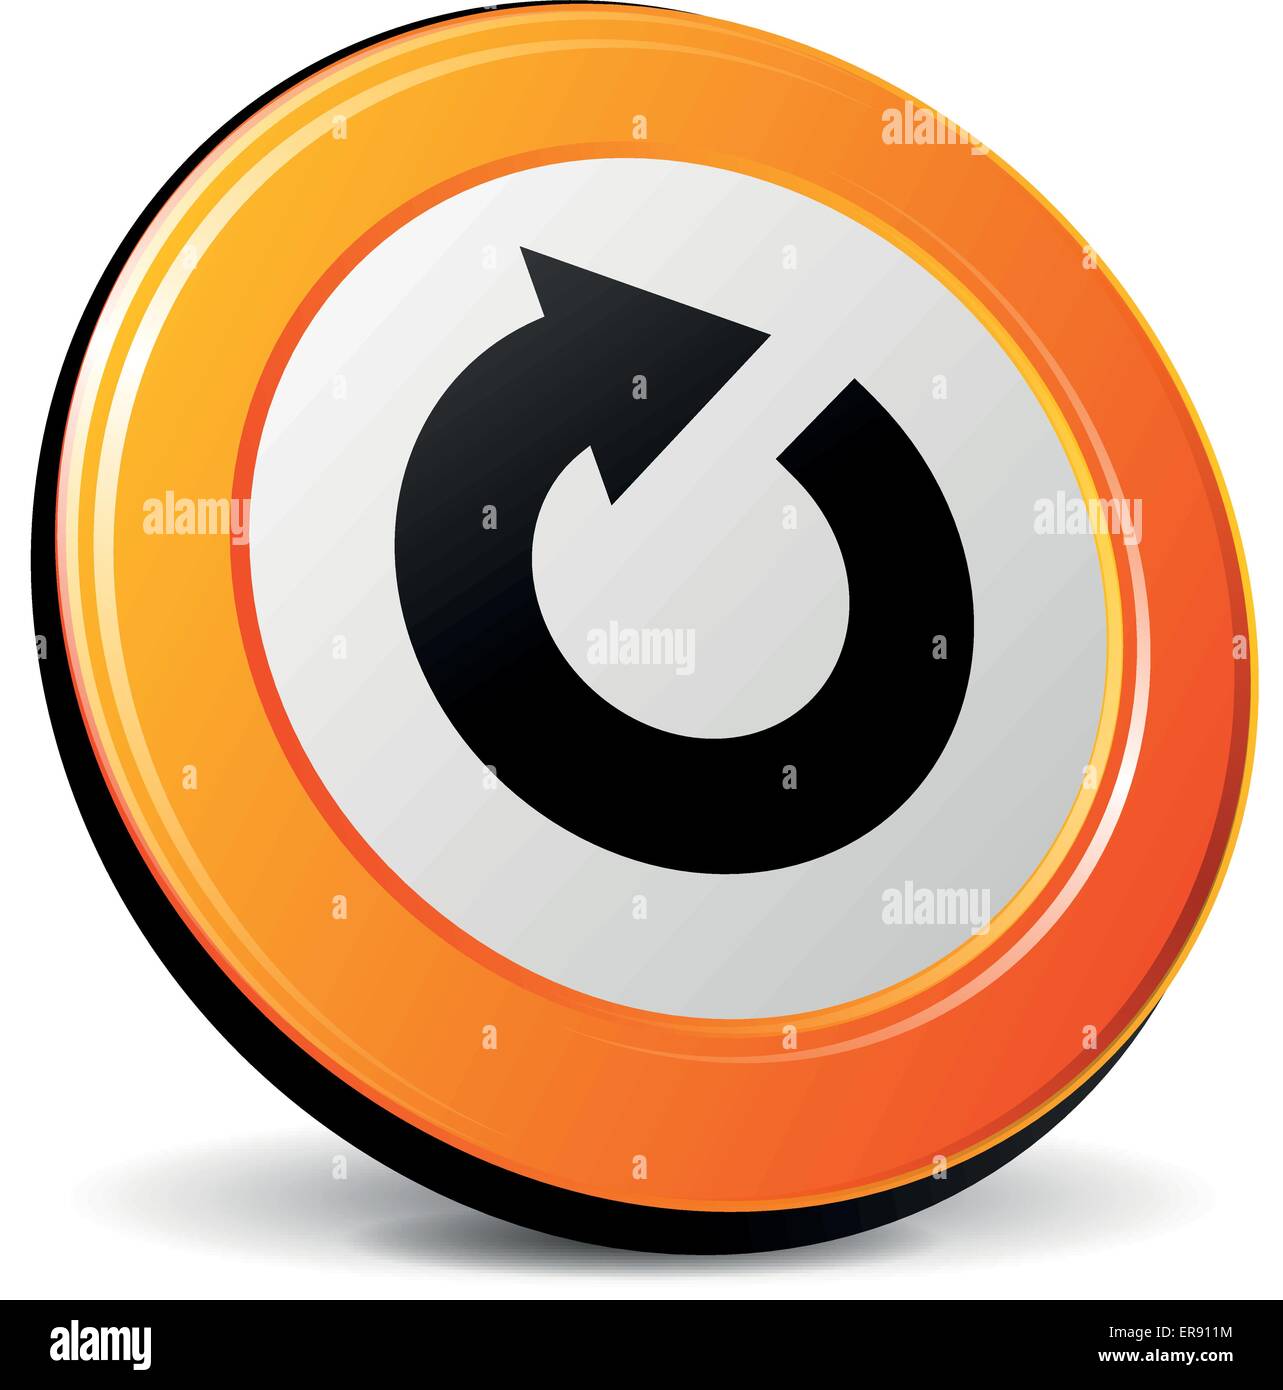 Vektor-Illustration der Orange 3d Symbol "aktualisieren" Stock Vektor